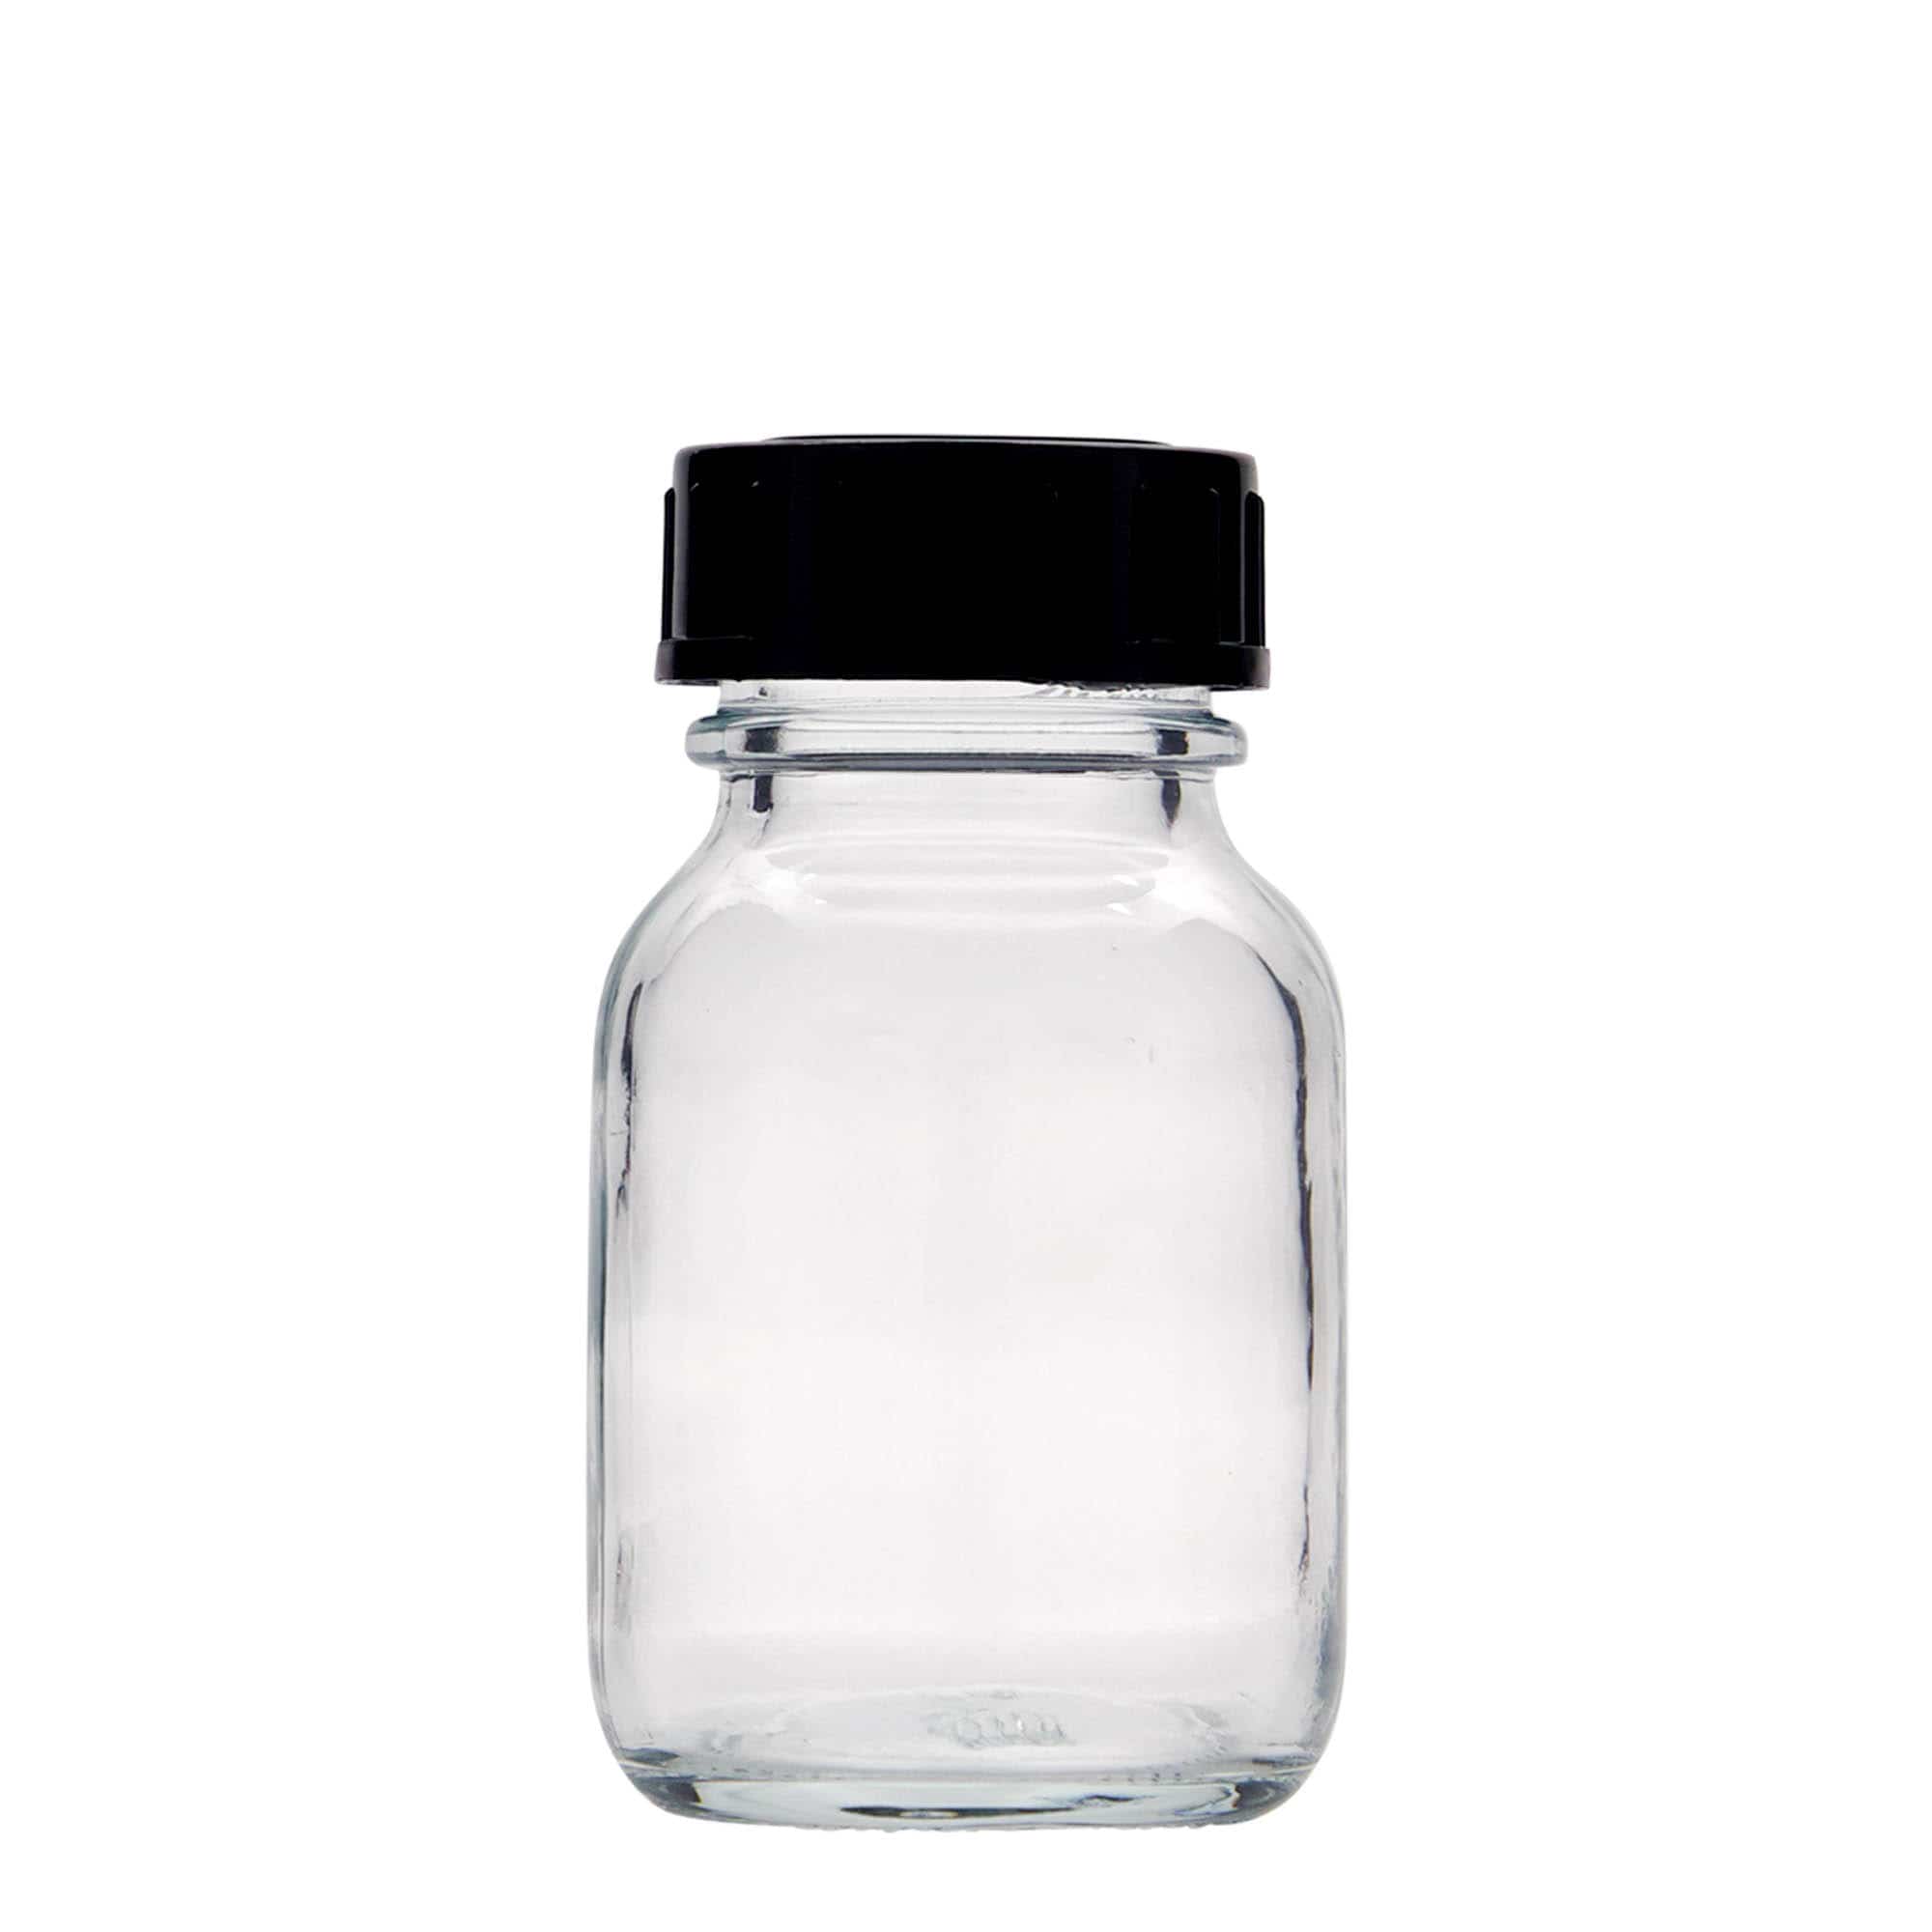 50 ml wide mouth jar, closure: DIN 32